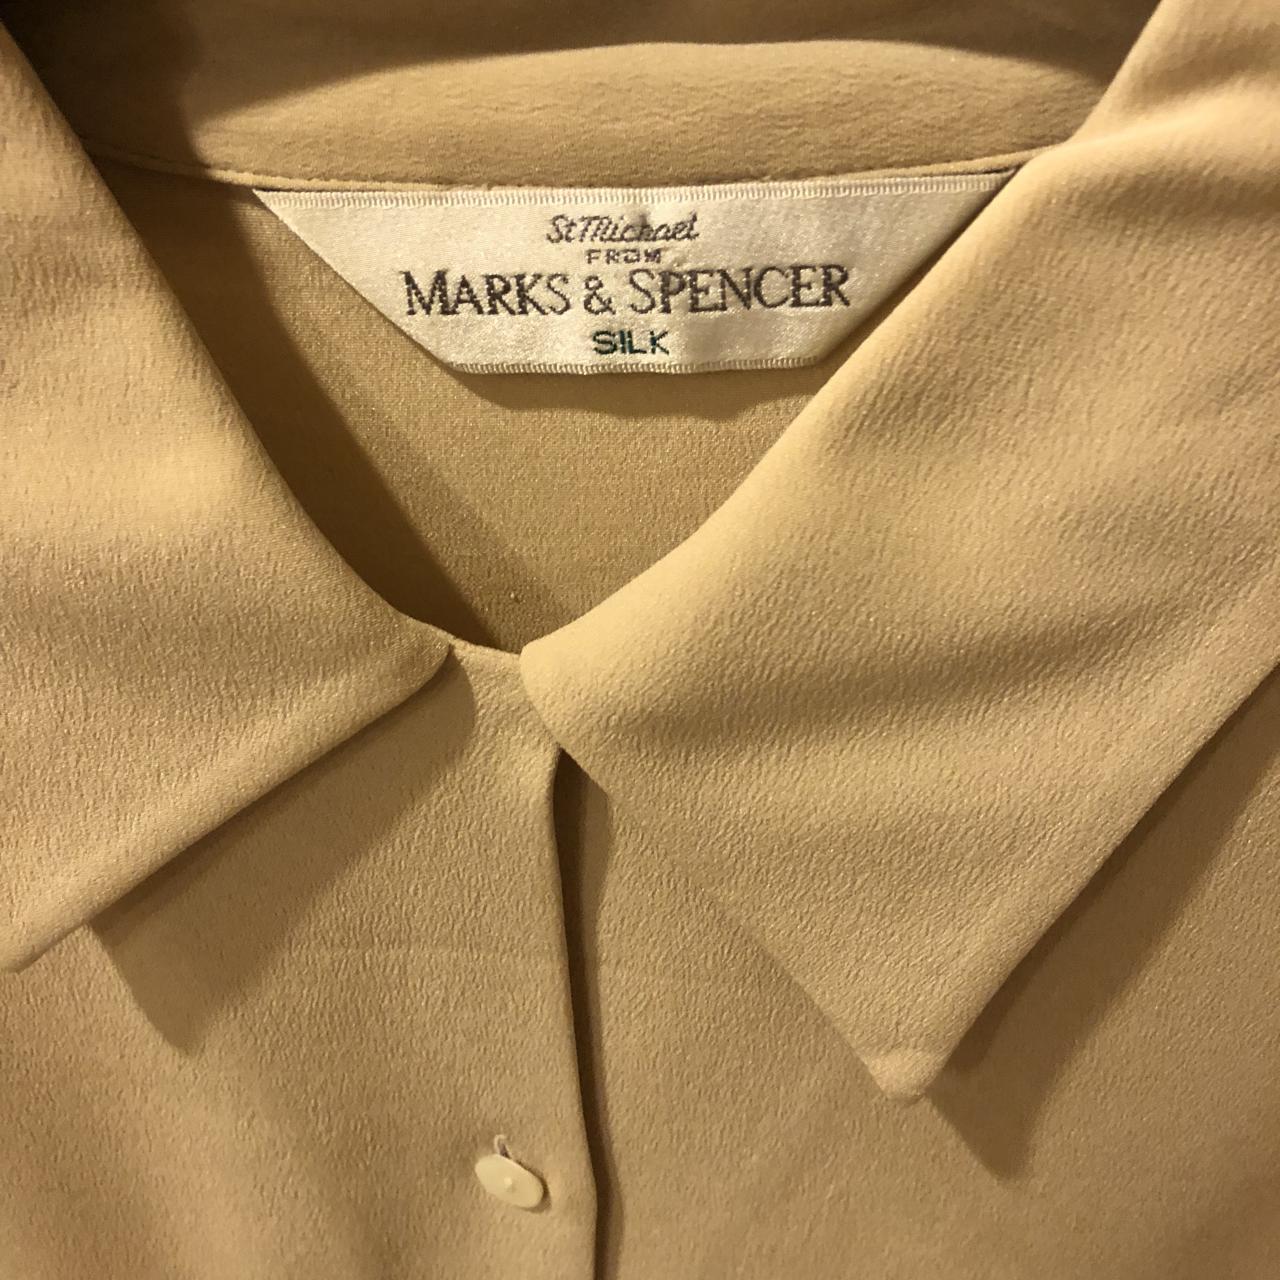 St Michael by Marks & Spencer 100% silk blouse.... - Depop